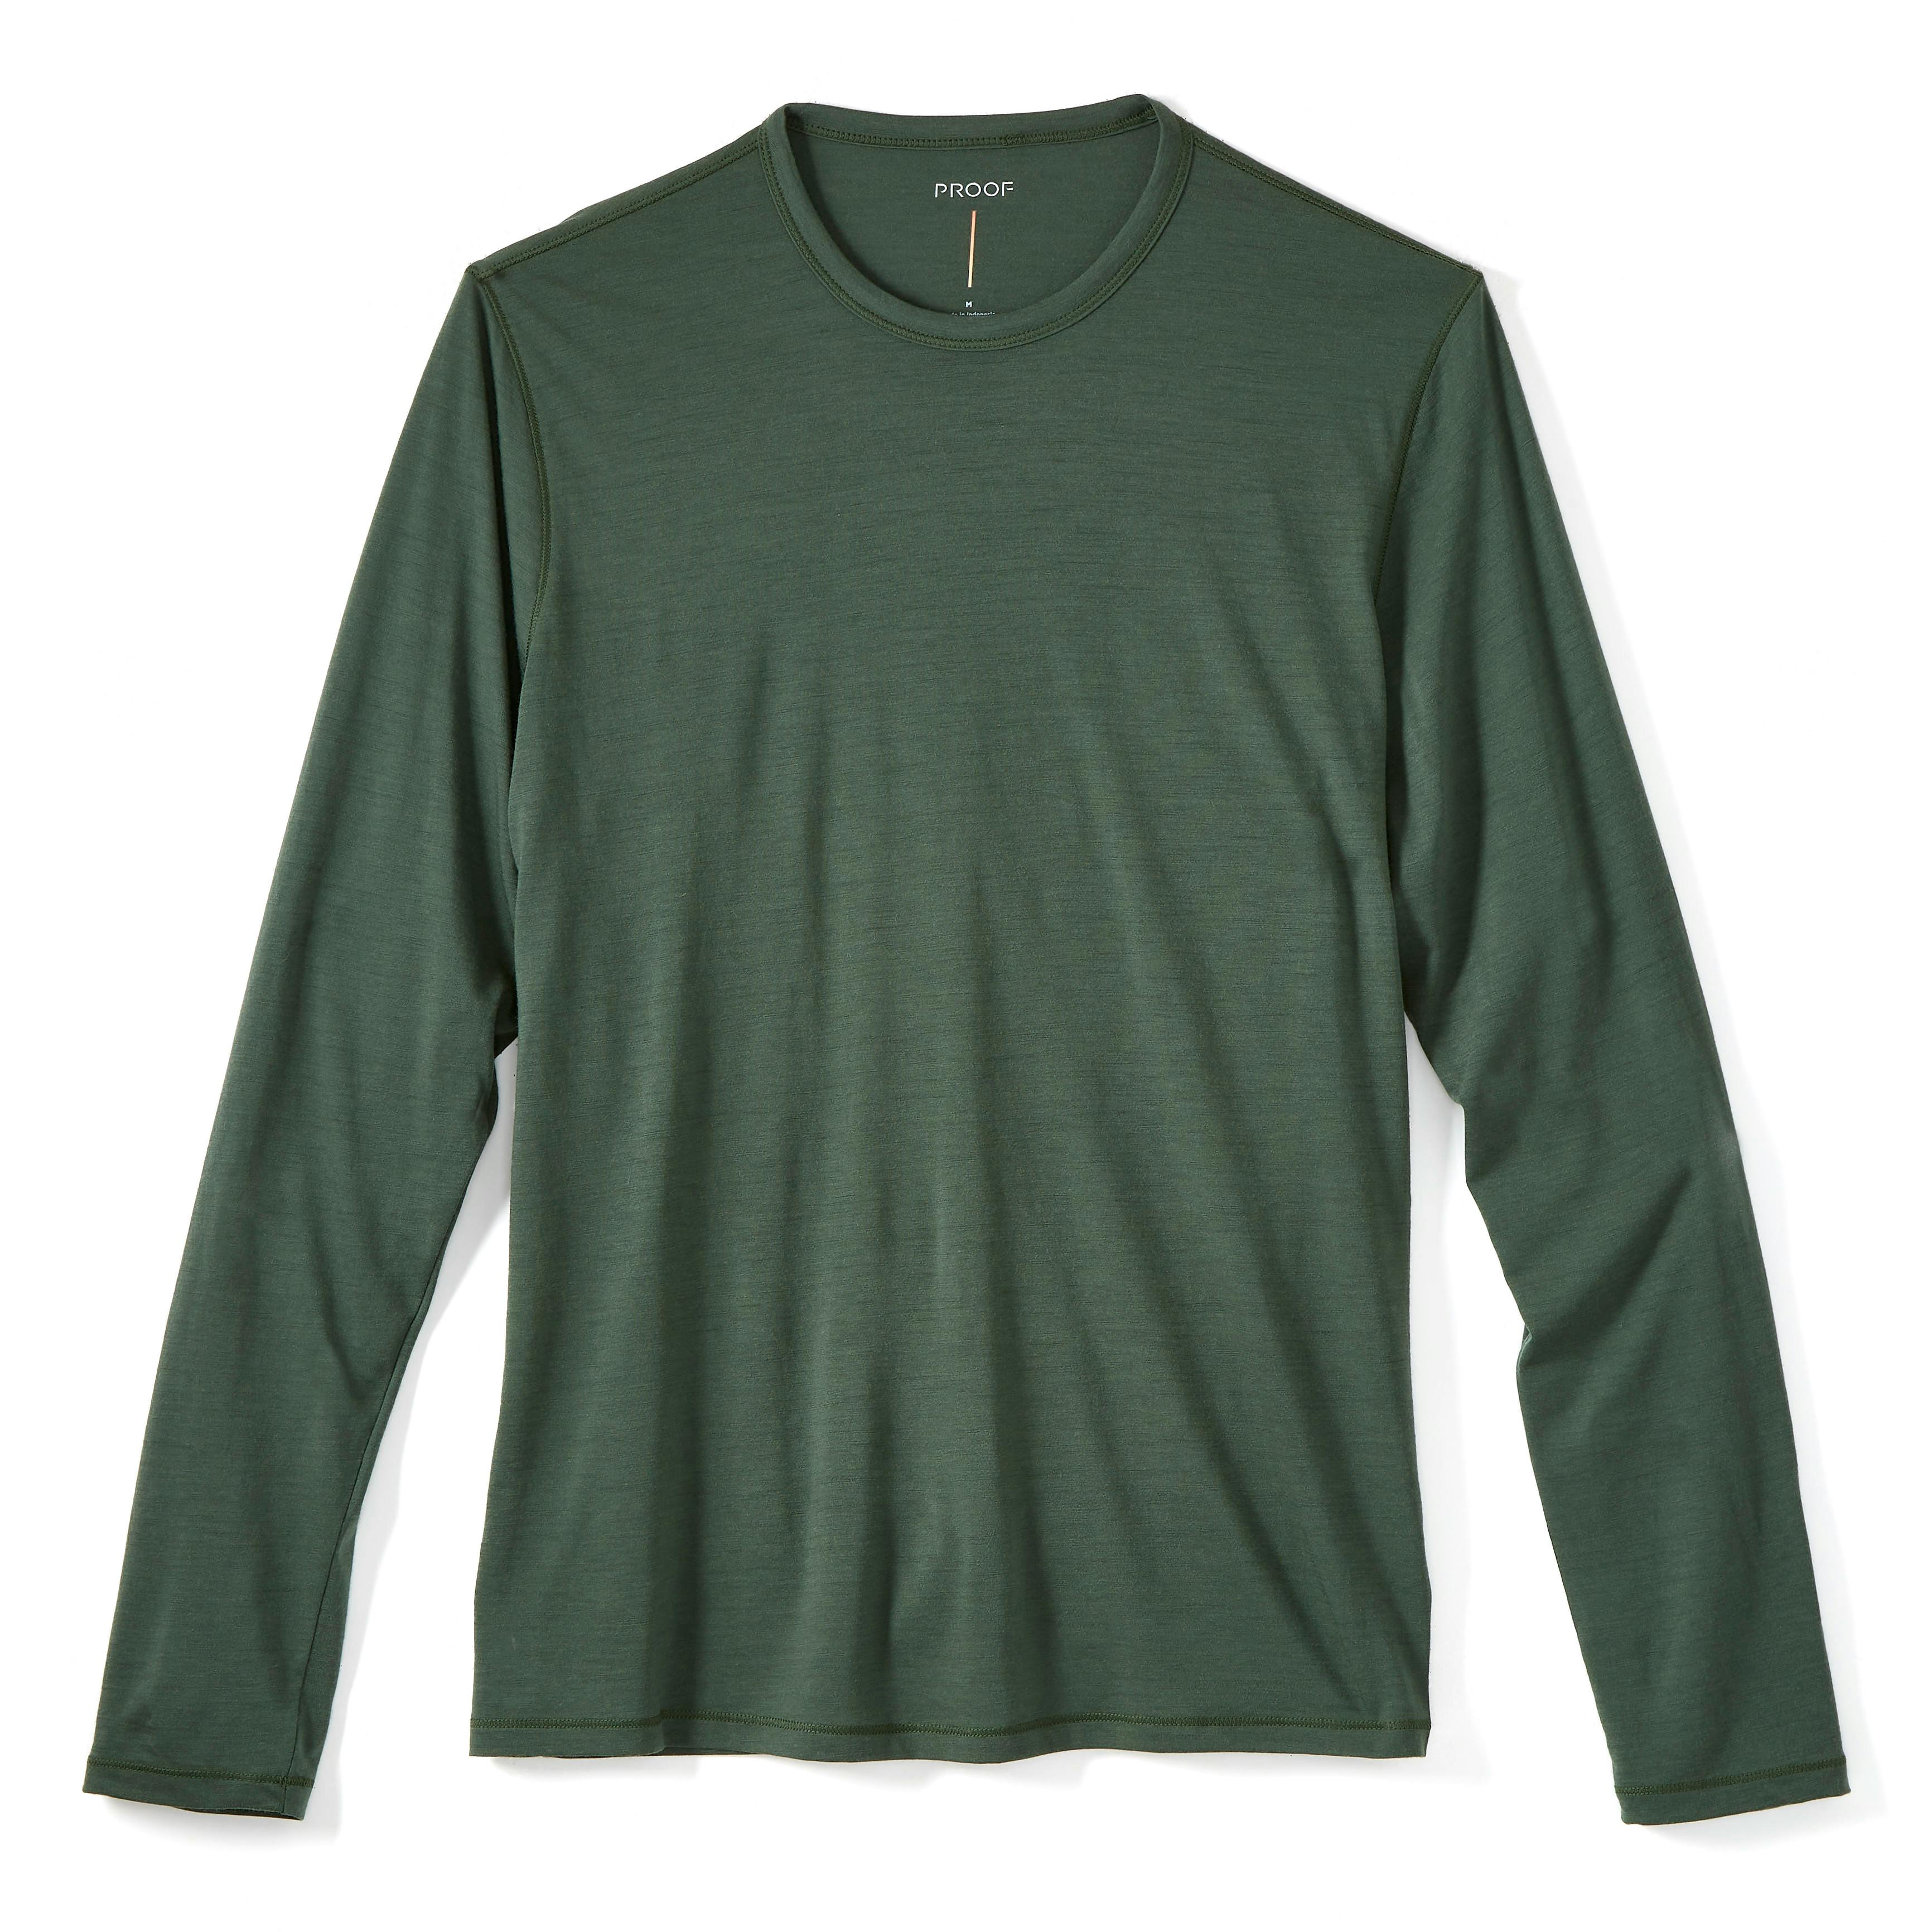 Gaiam Everyday Basic Hooded Shirt - Long Sleeve - Save 72%